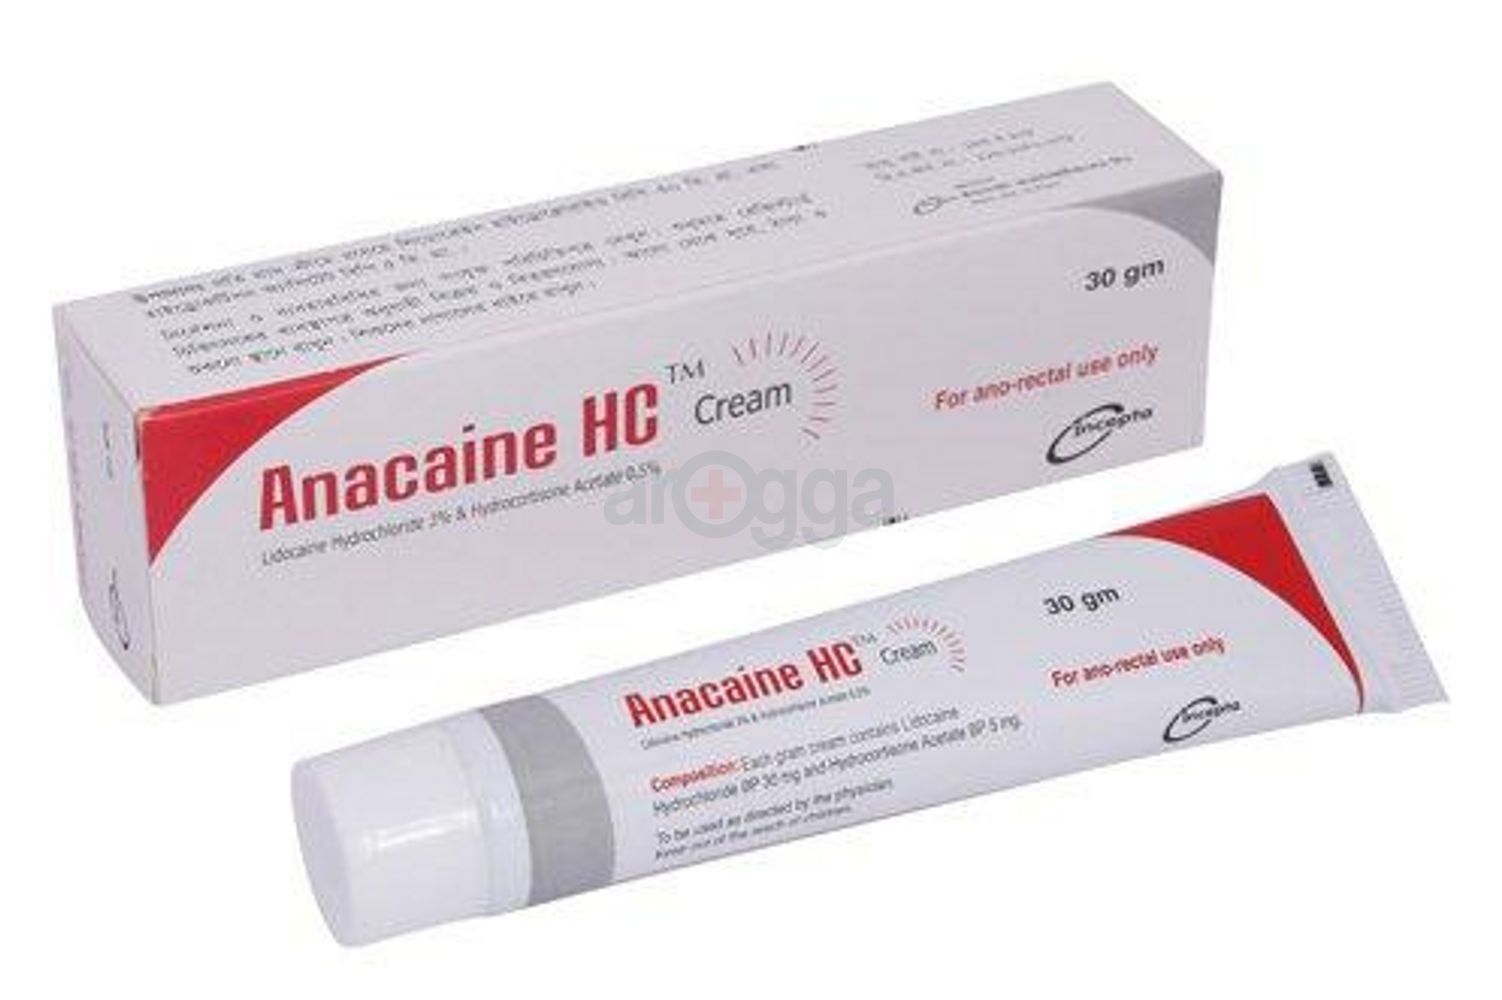 Anacaine HC